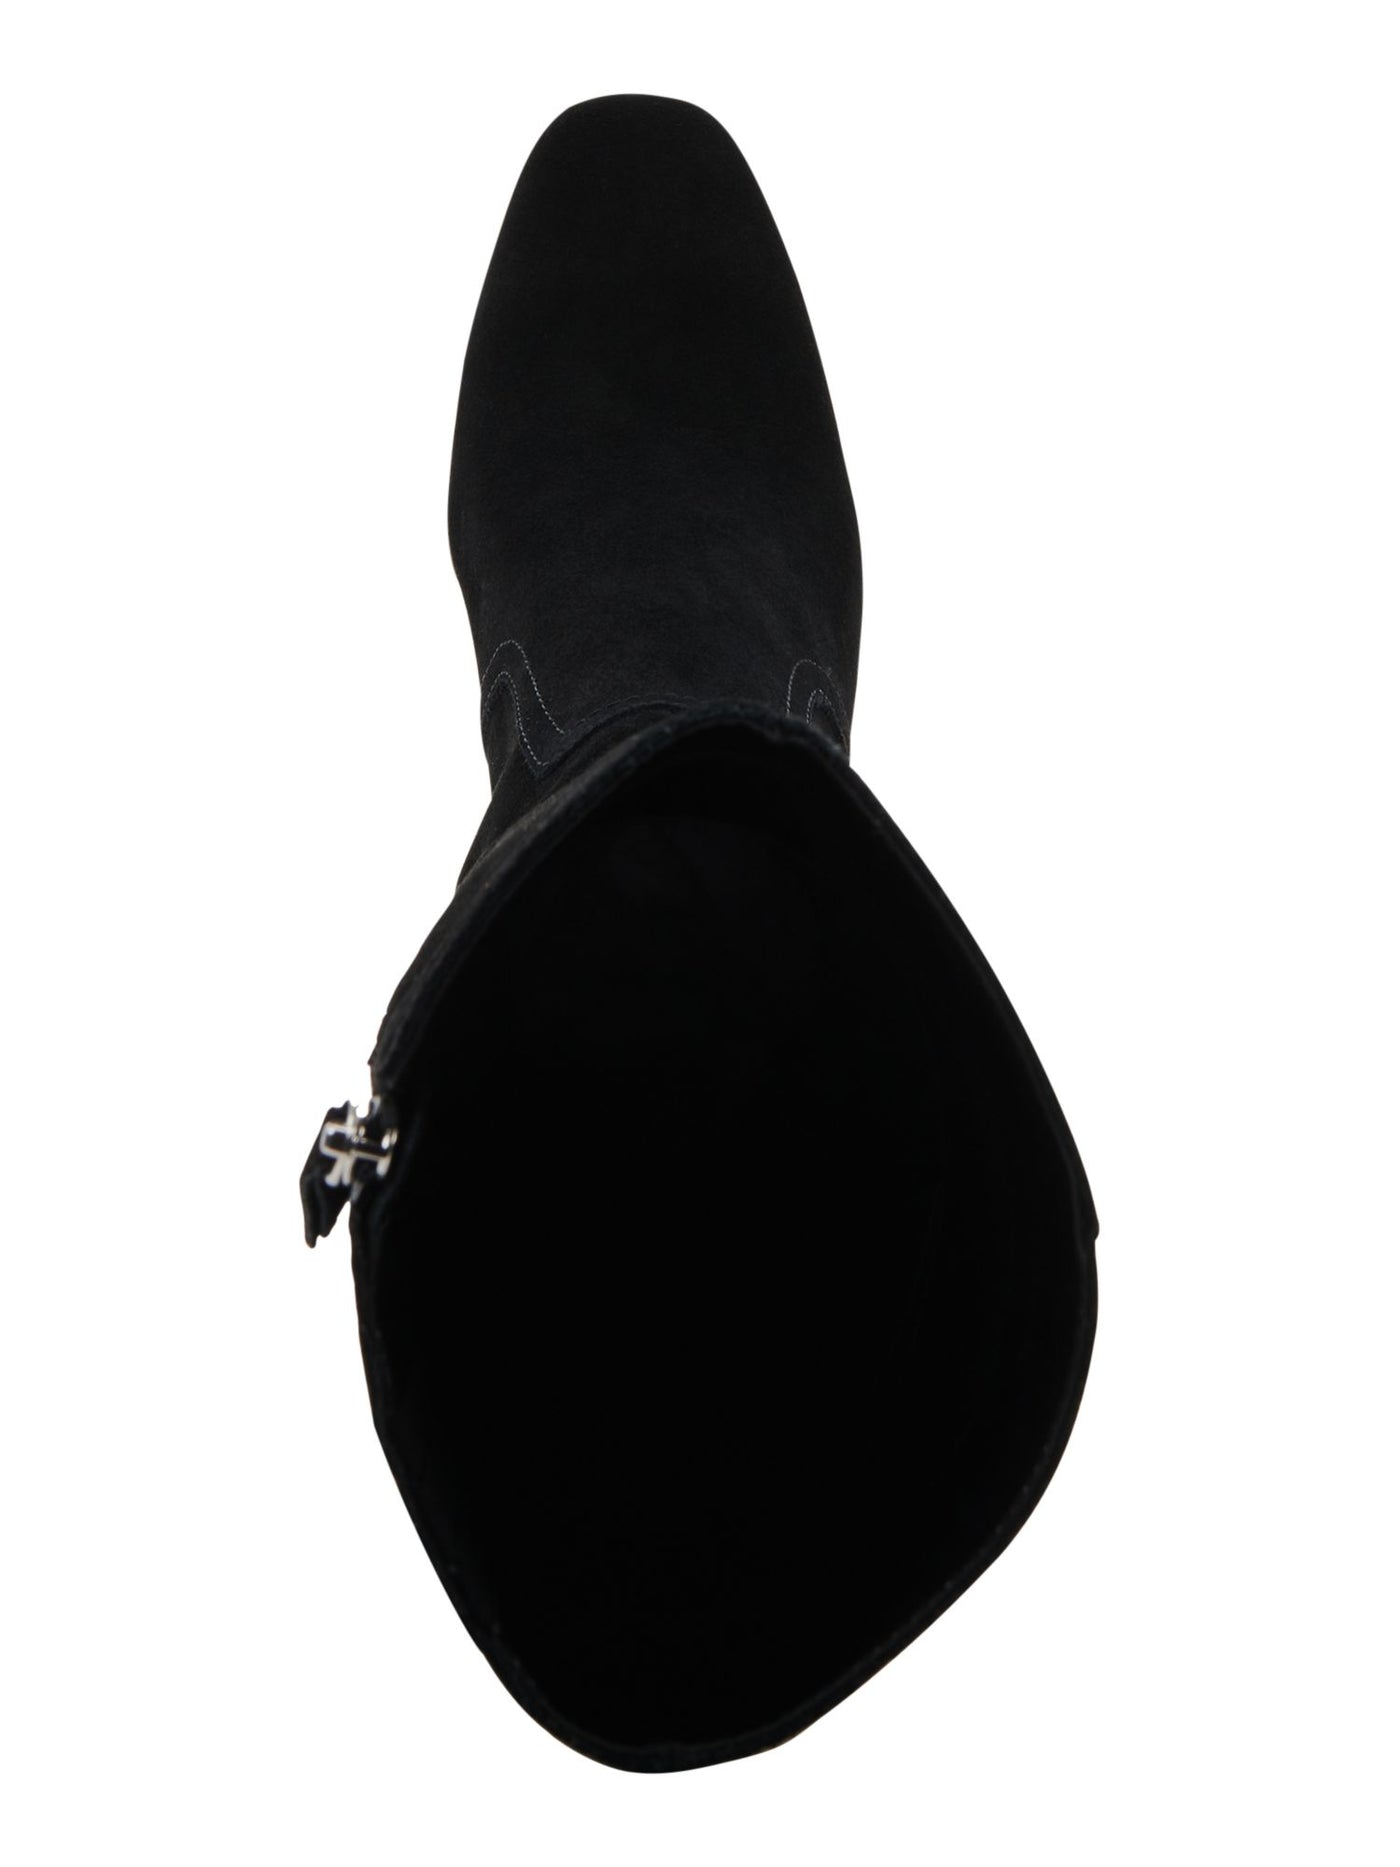 AQUA COLLEGE Womens Black Goring Cushioned Waterproof Tori Square Toe Stacked Heel Zip-Up Dress Boots Shoes 6.5 M